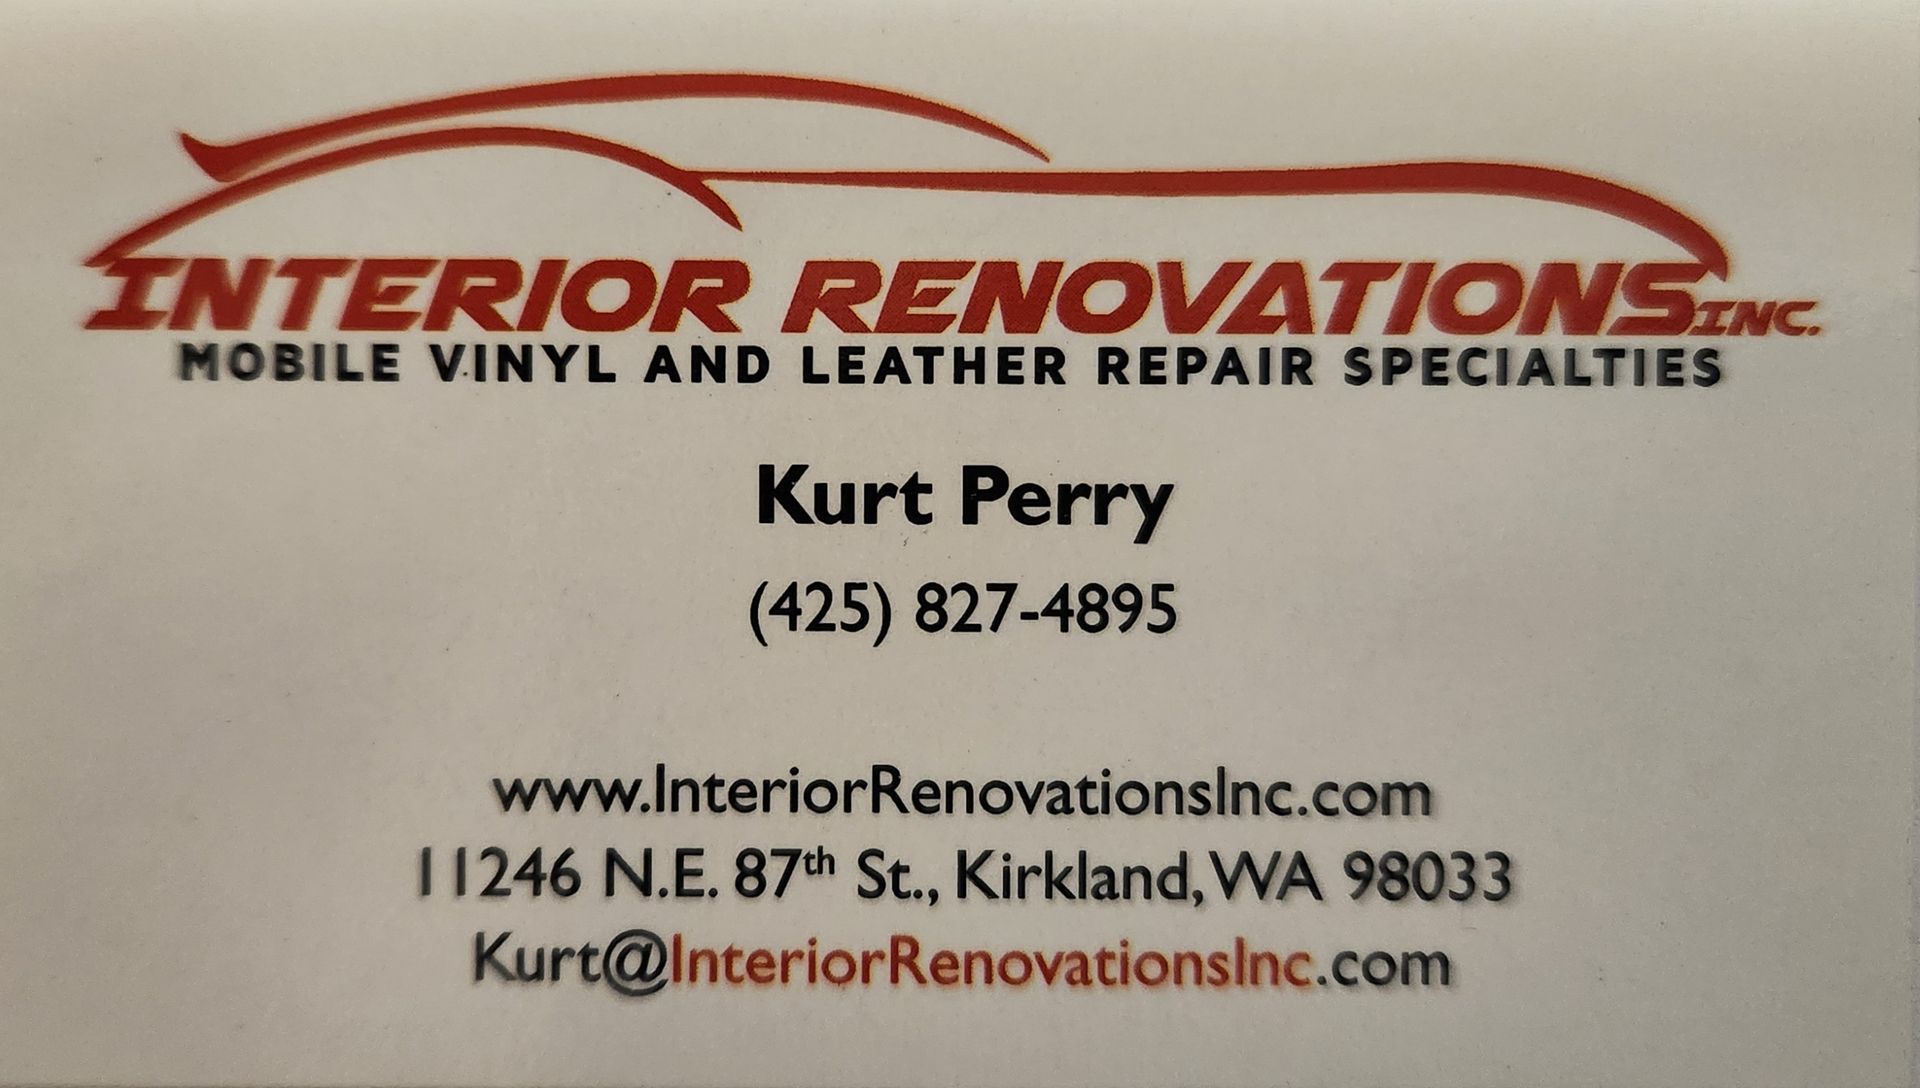 Interior Renovations business card